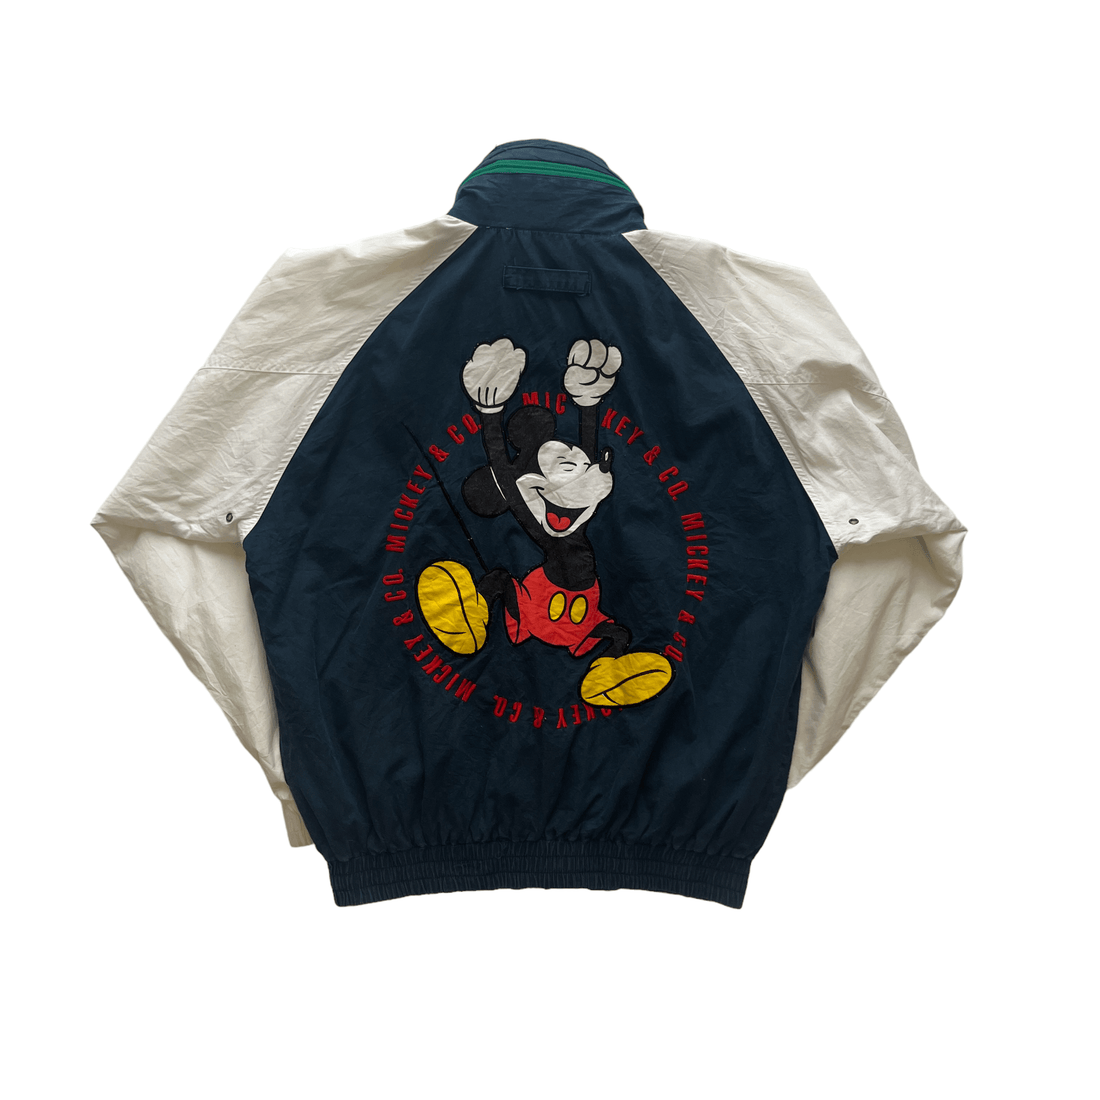 Vintage 90s Navy Blue + White Mickey Mouse Disney Jacket - Medium - The Streetwear Studio